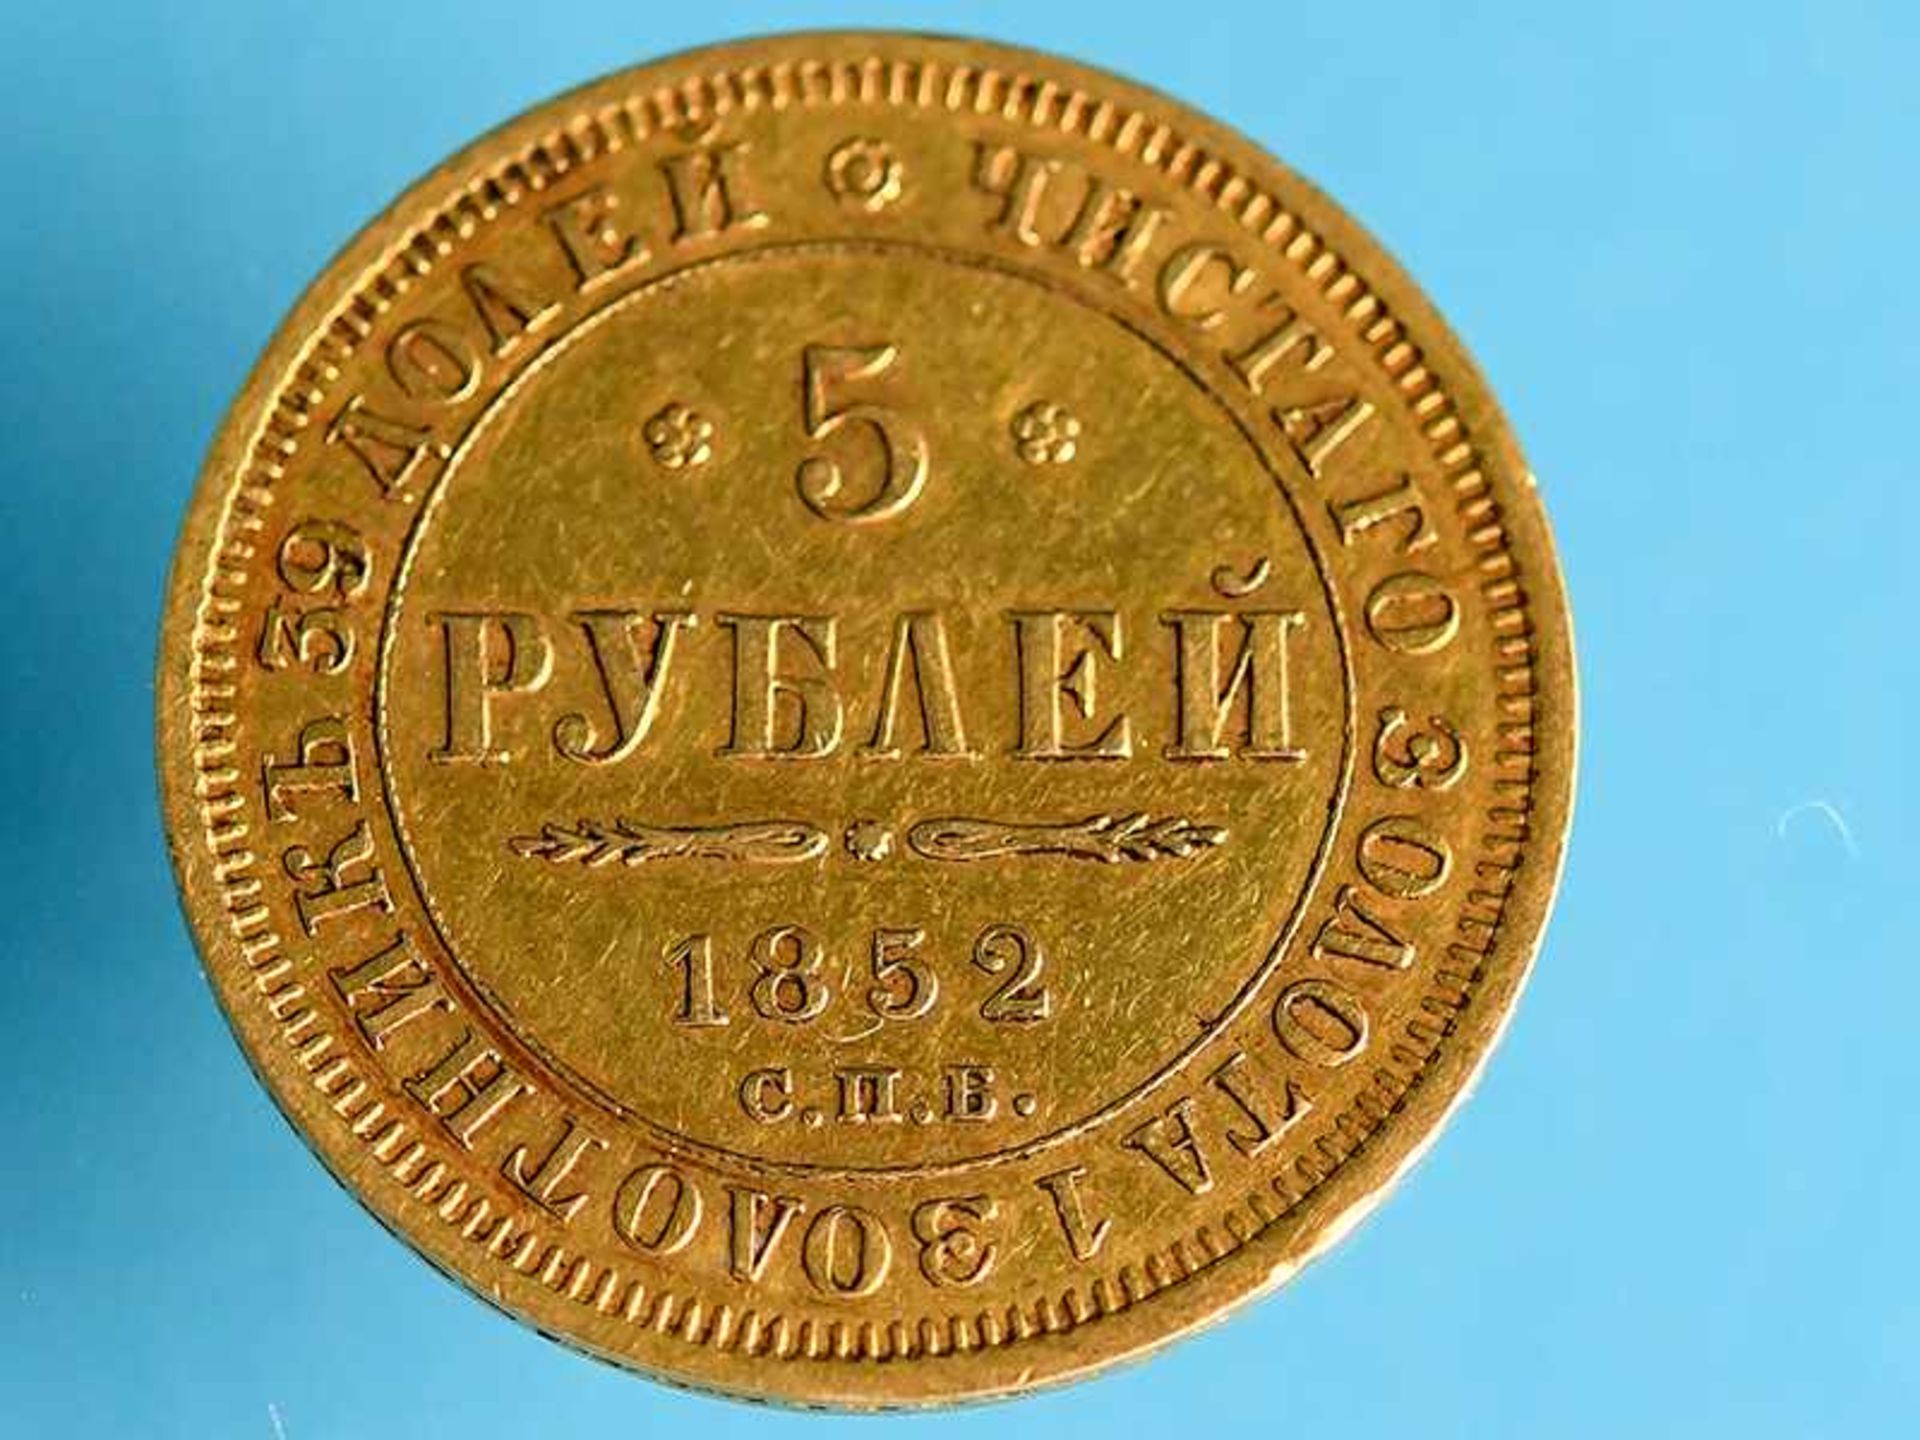 Goldmünze "5 Rubel", Russland (Nikolaus I./ 1815 - 1855), 1852. 917/-Gold, ca. 6,5 g. Mit